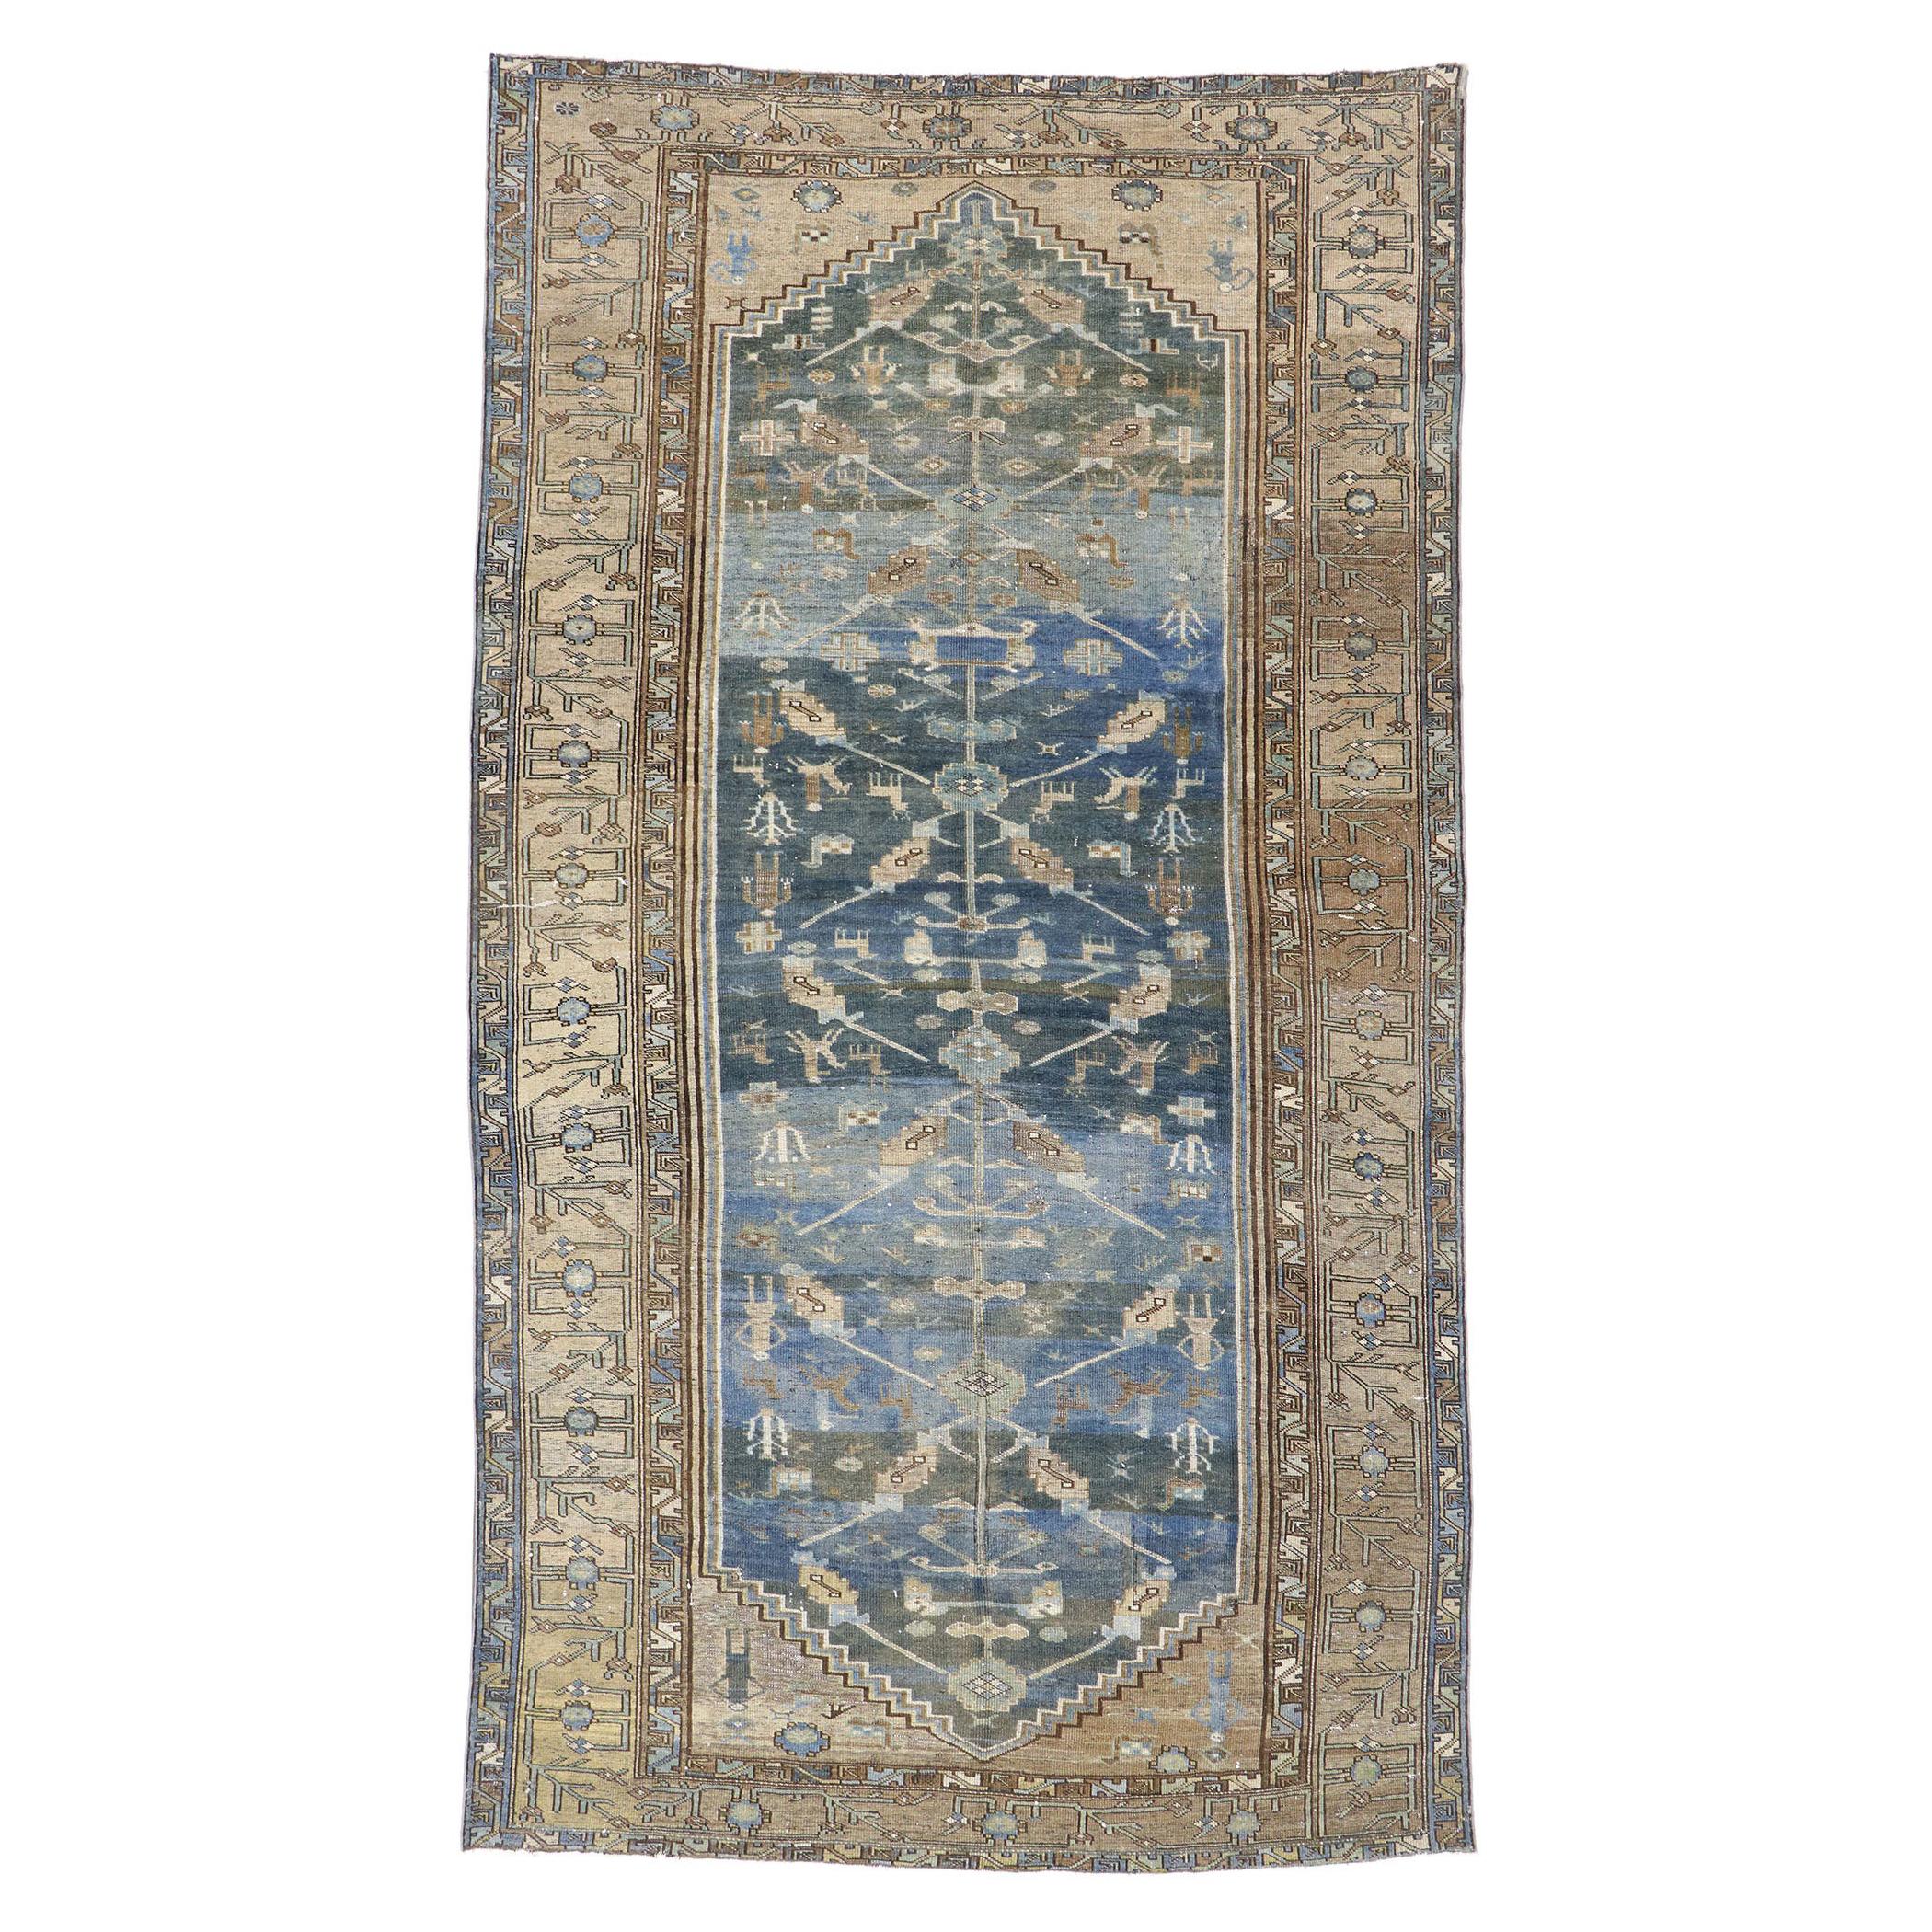 Ancien tapis de galerie persan Malayer de style méditerranéen grec